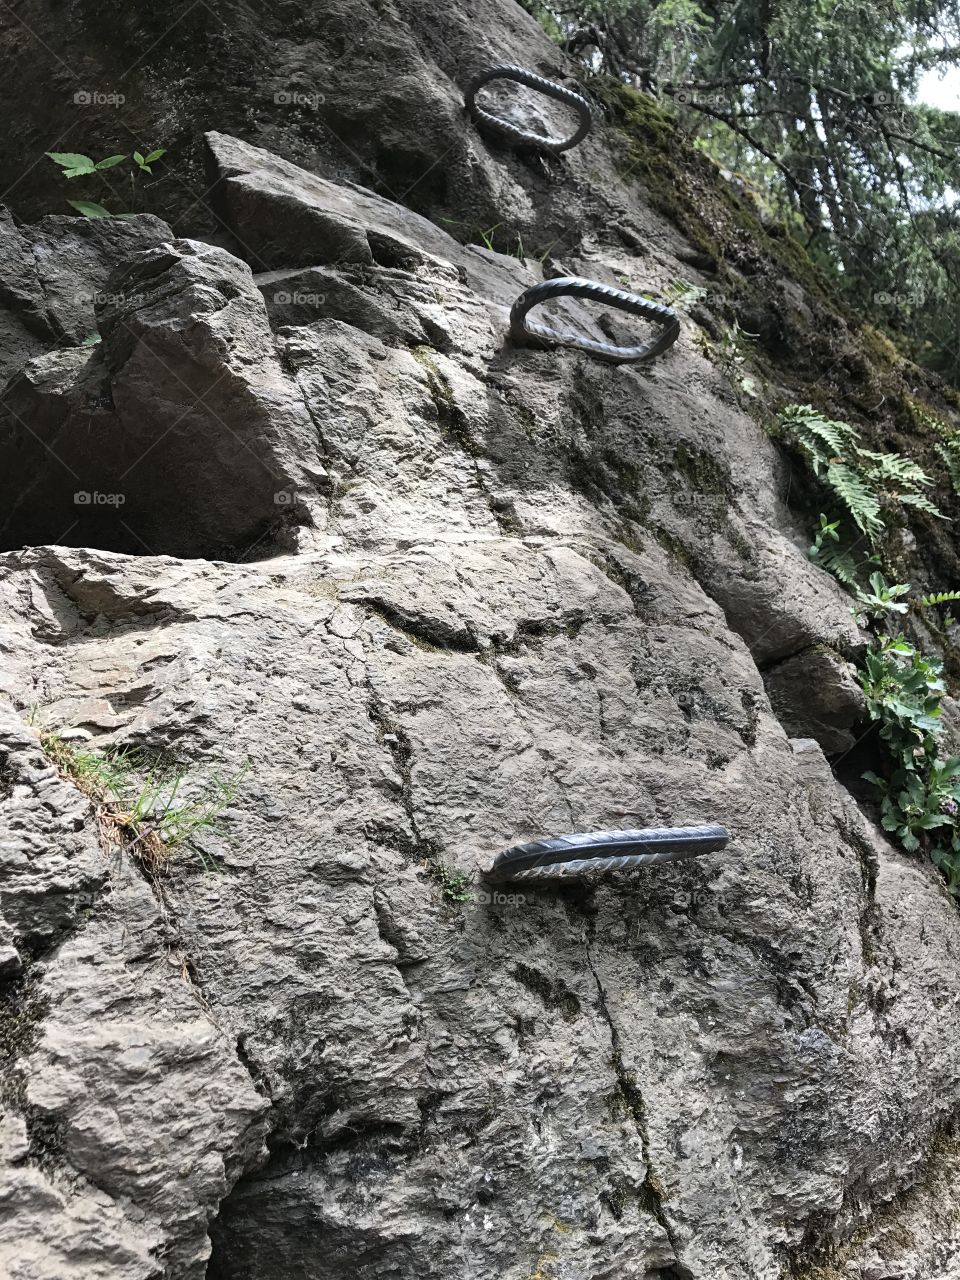 Stuibenfall Klettersteig 